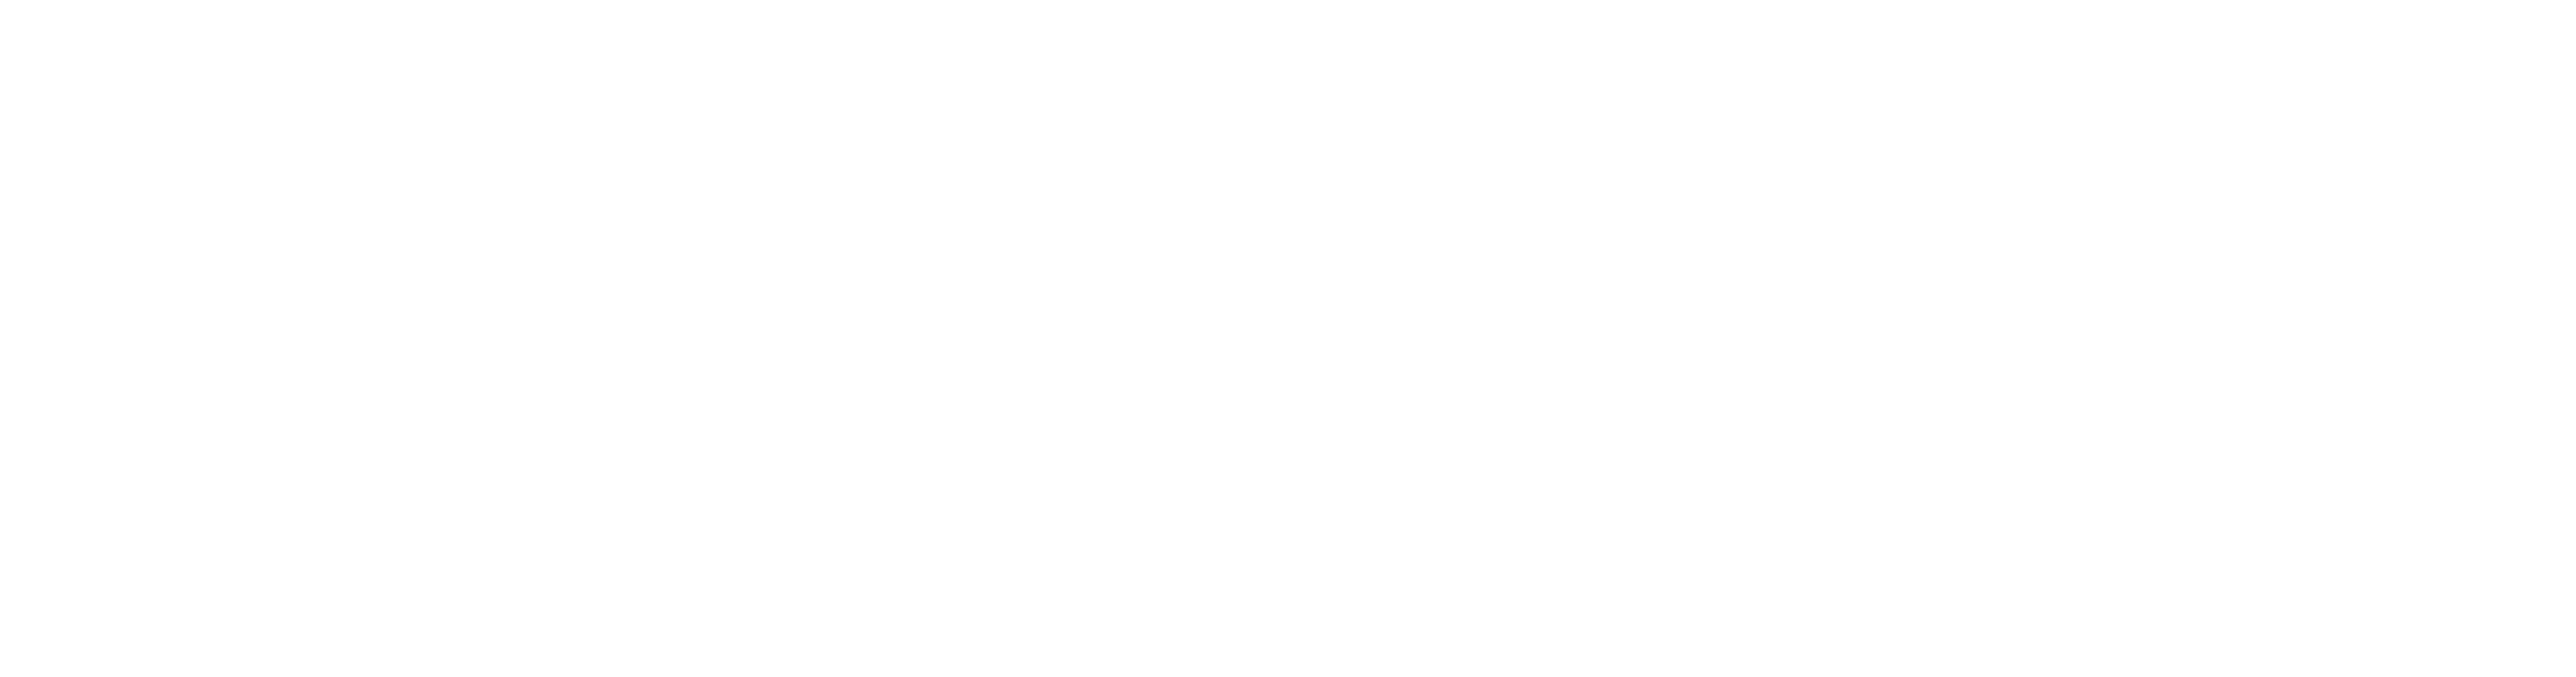 kungraseri productions logo